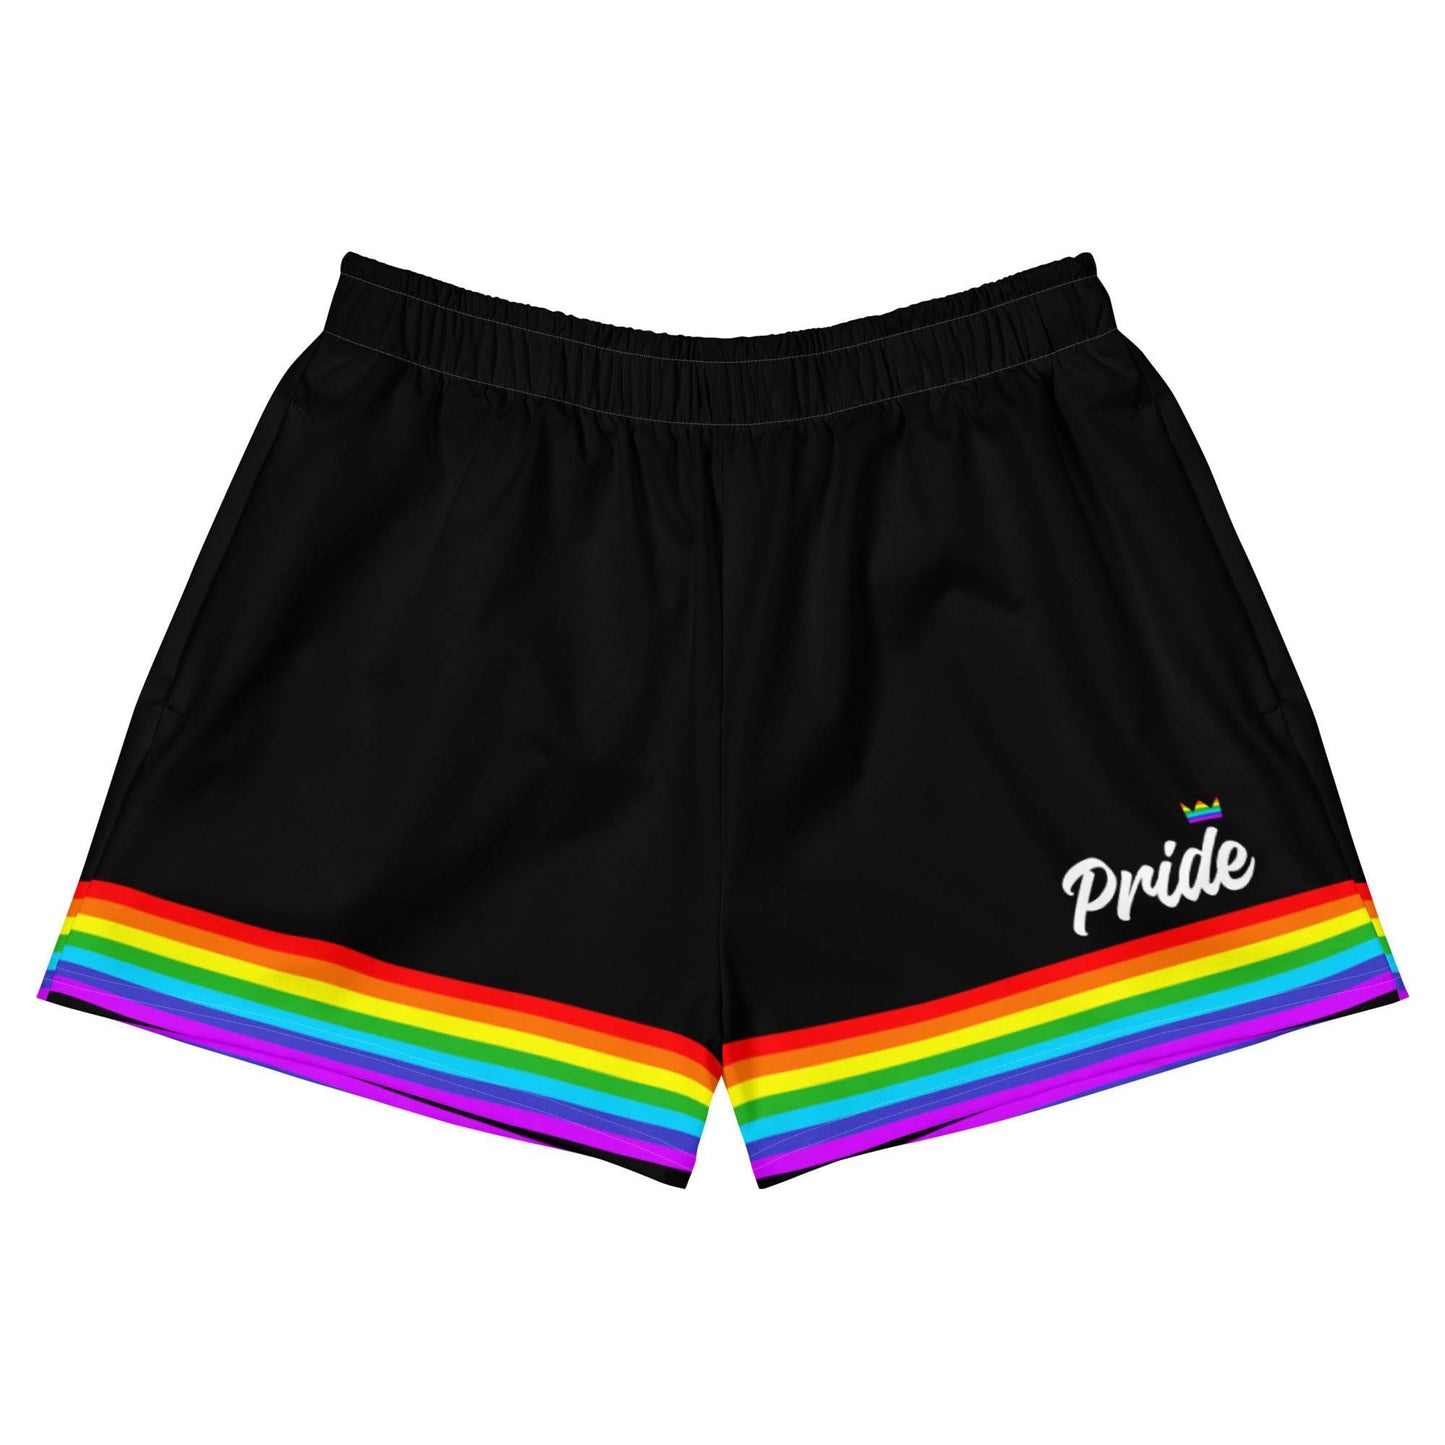 Black Rainbow Pride Athletic Shorts - Rose Gold Co. Shop